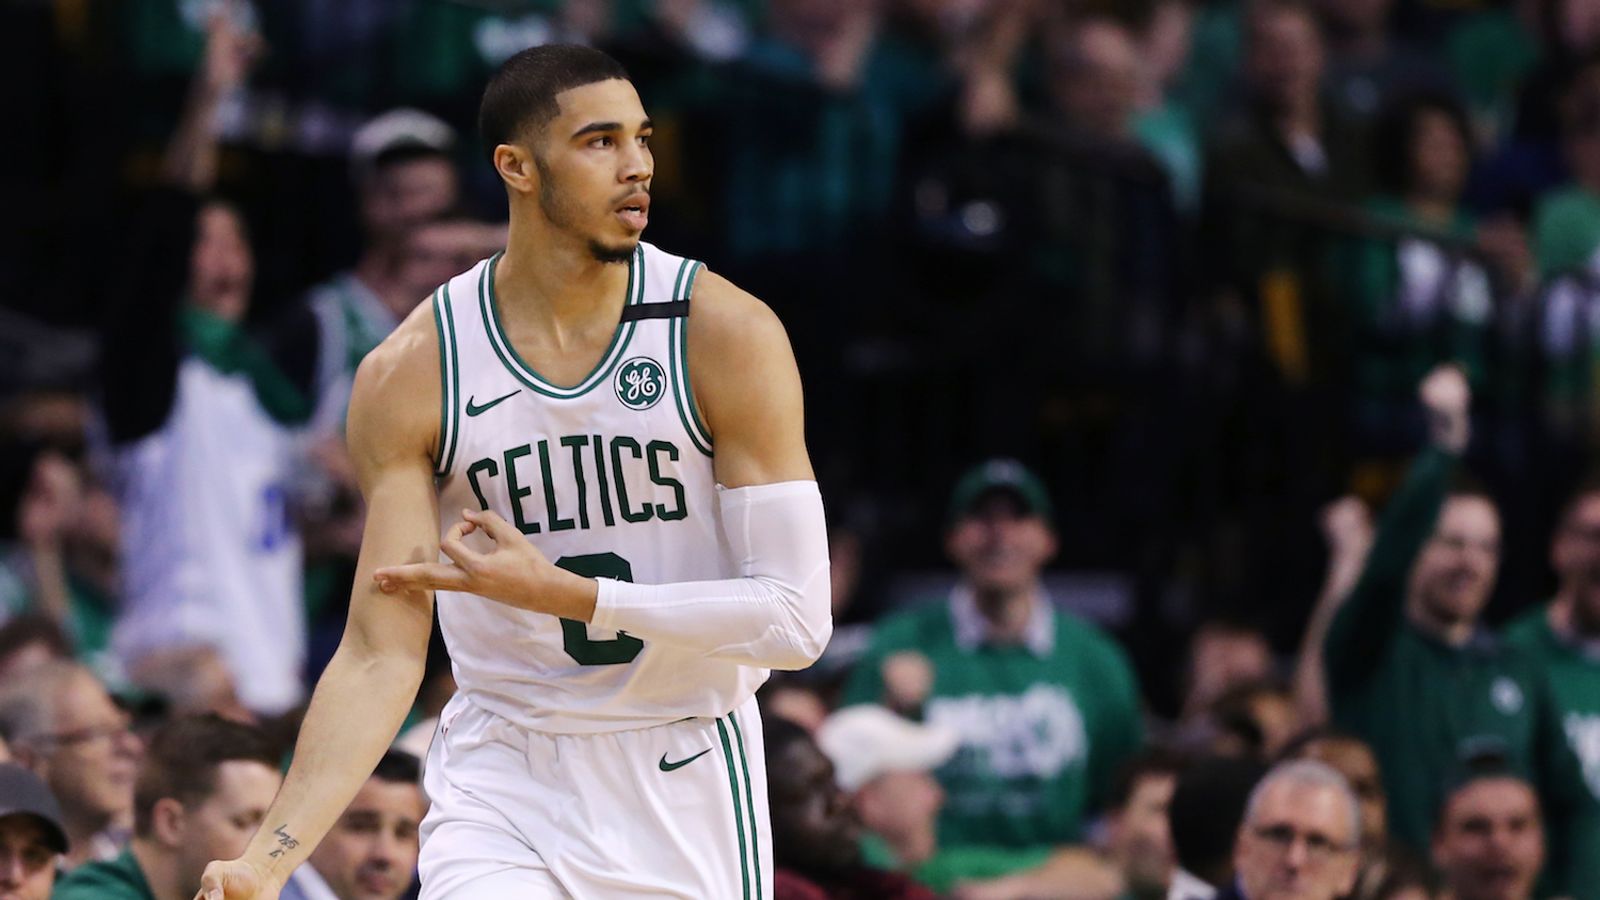 Tayshaun Prince on future with Boston Celtics: 'All options are on